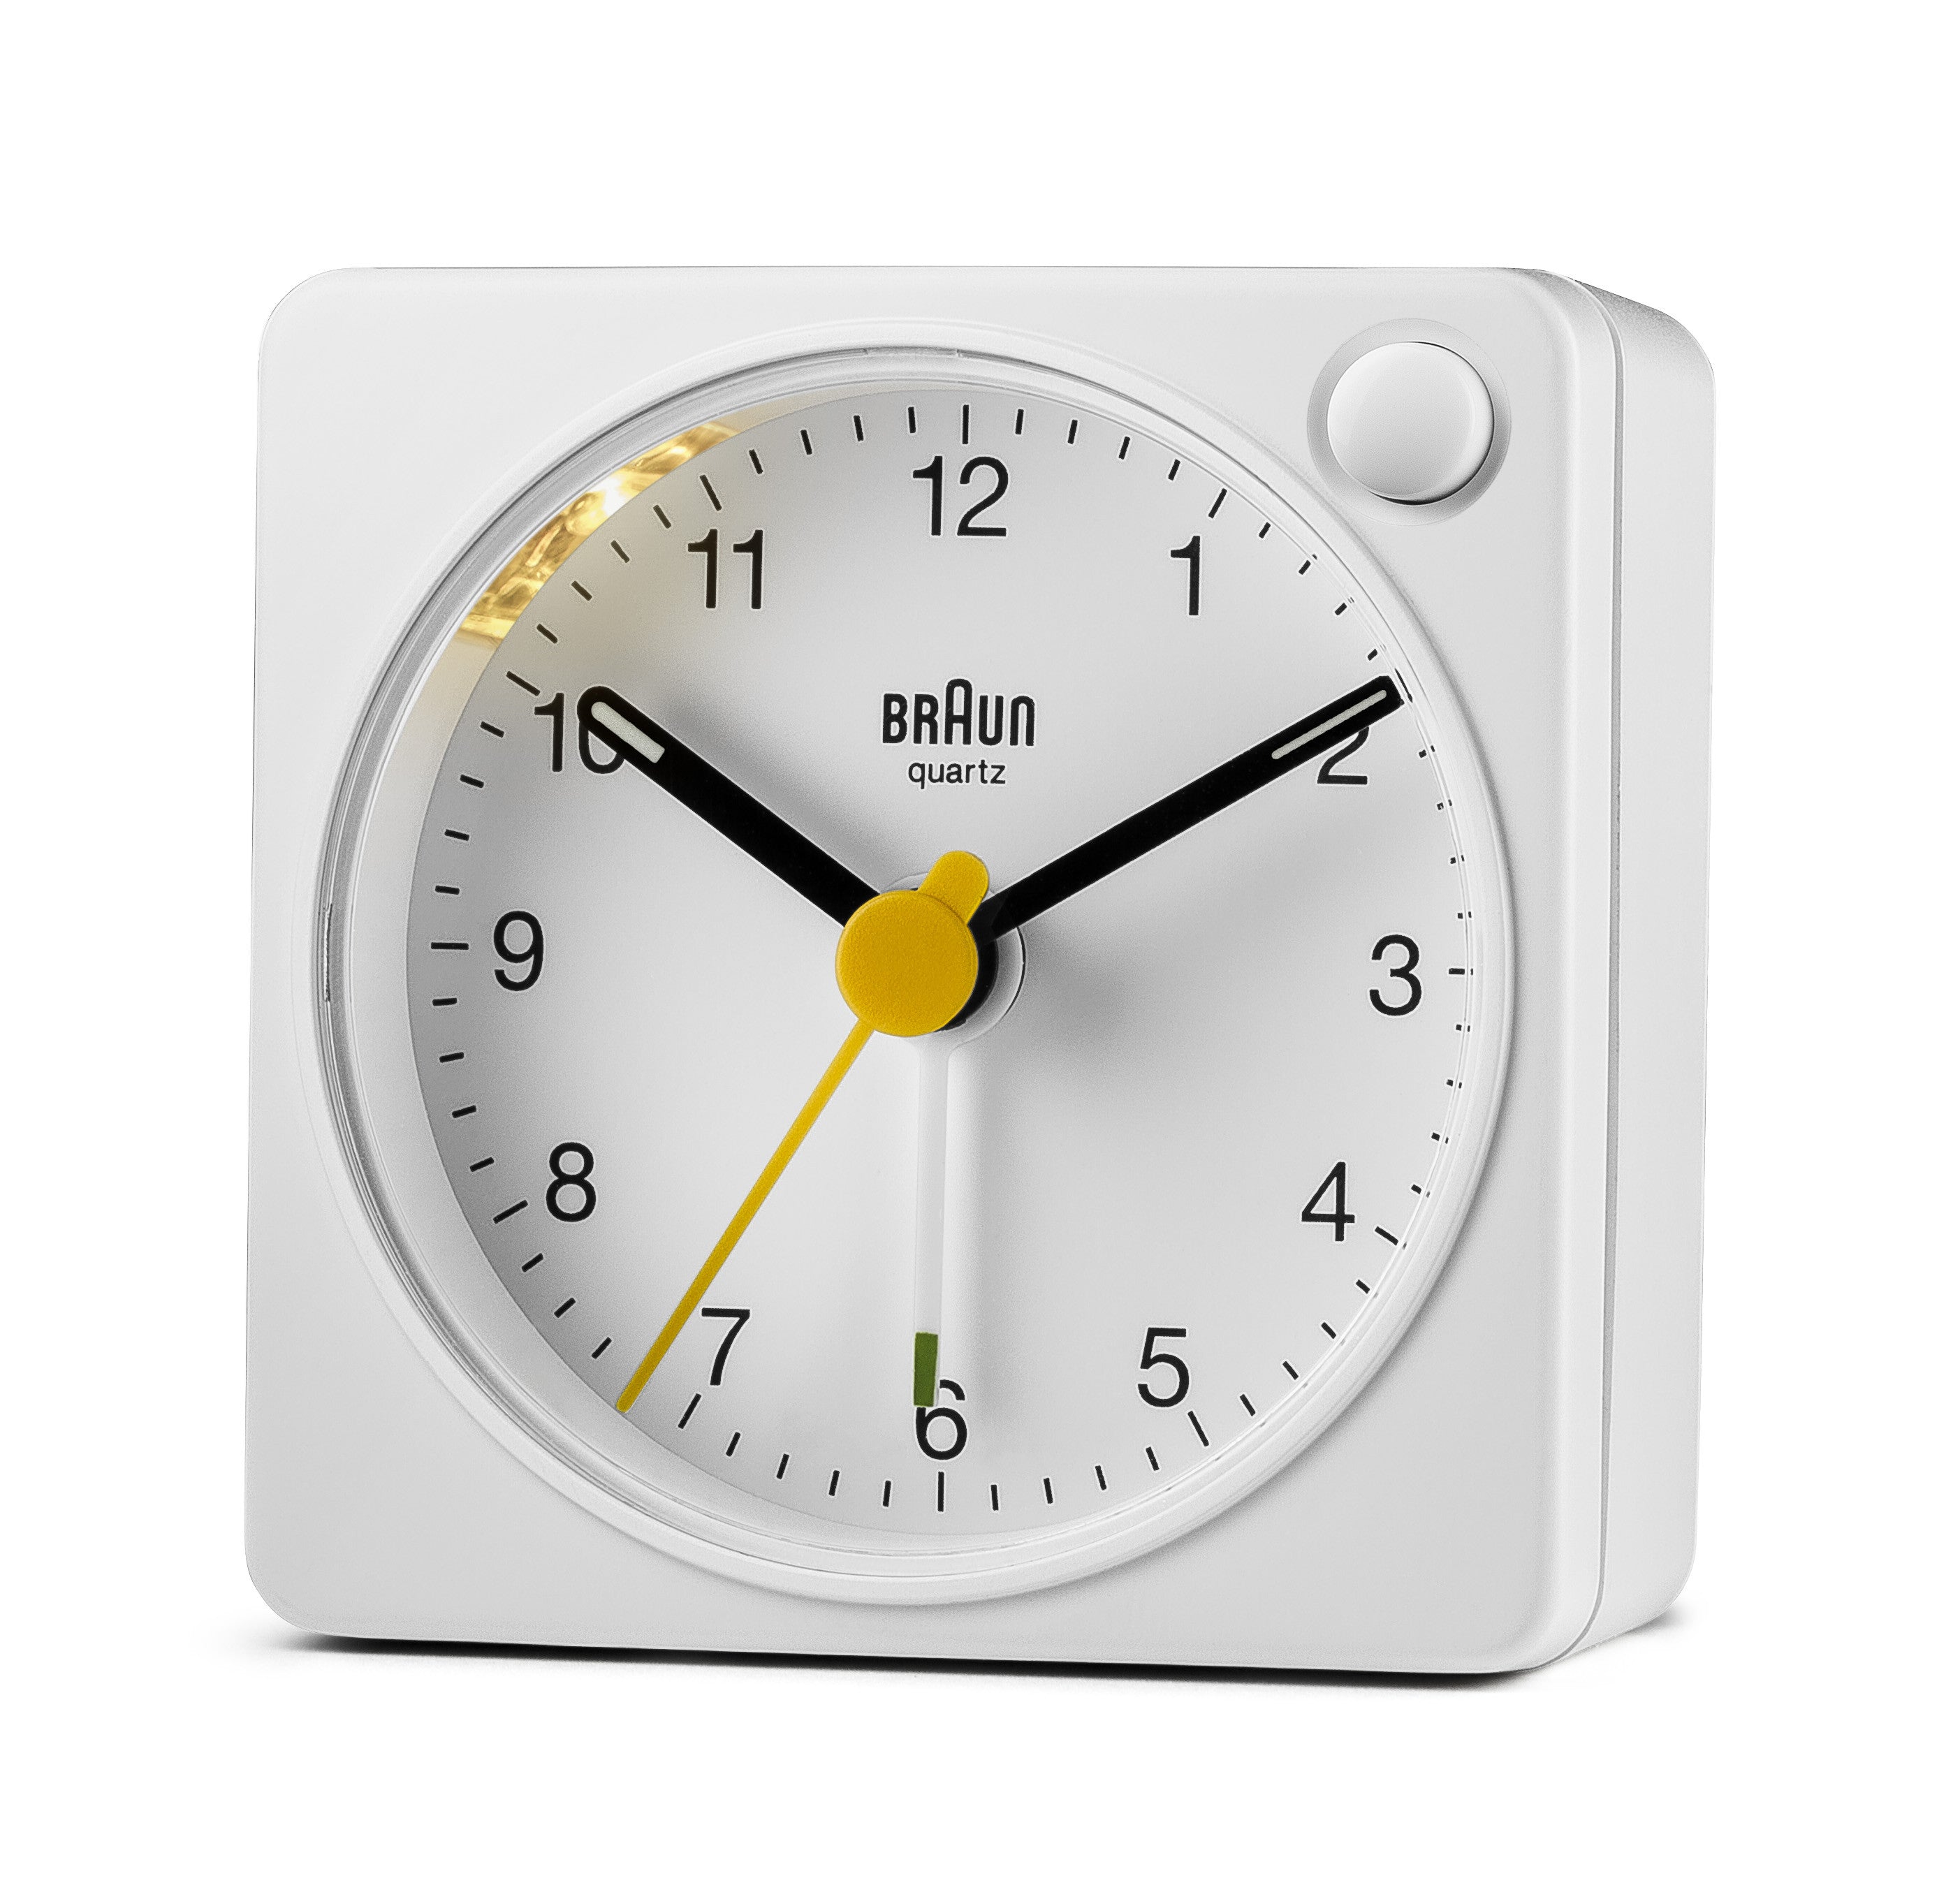 Braun Classic Travel Analogue Alarm Clock – White/White